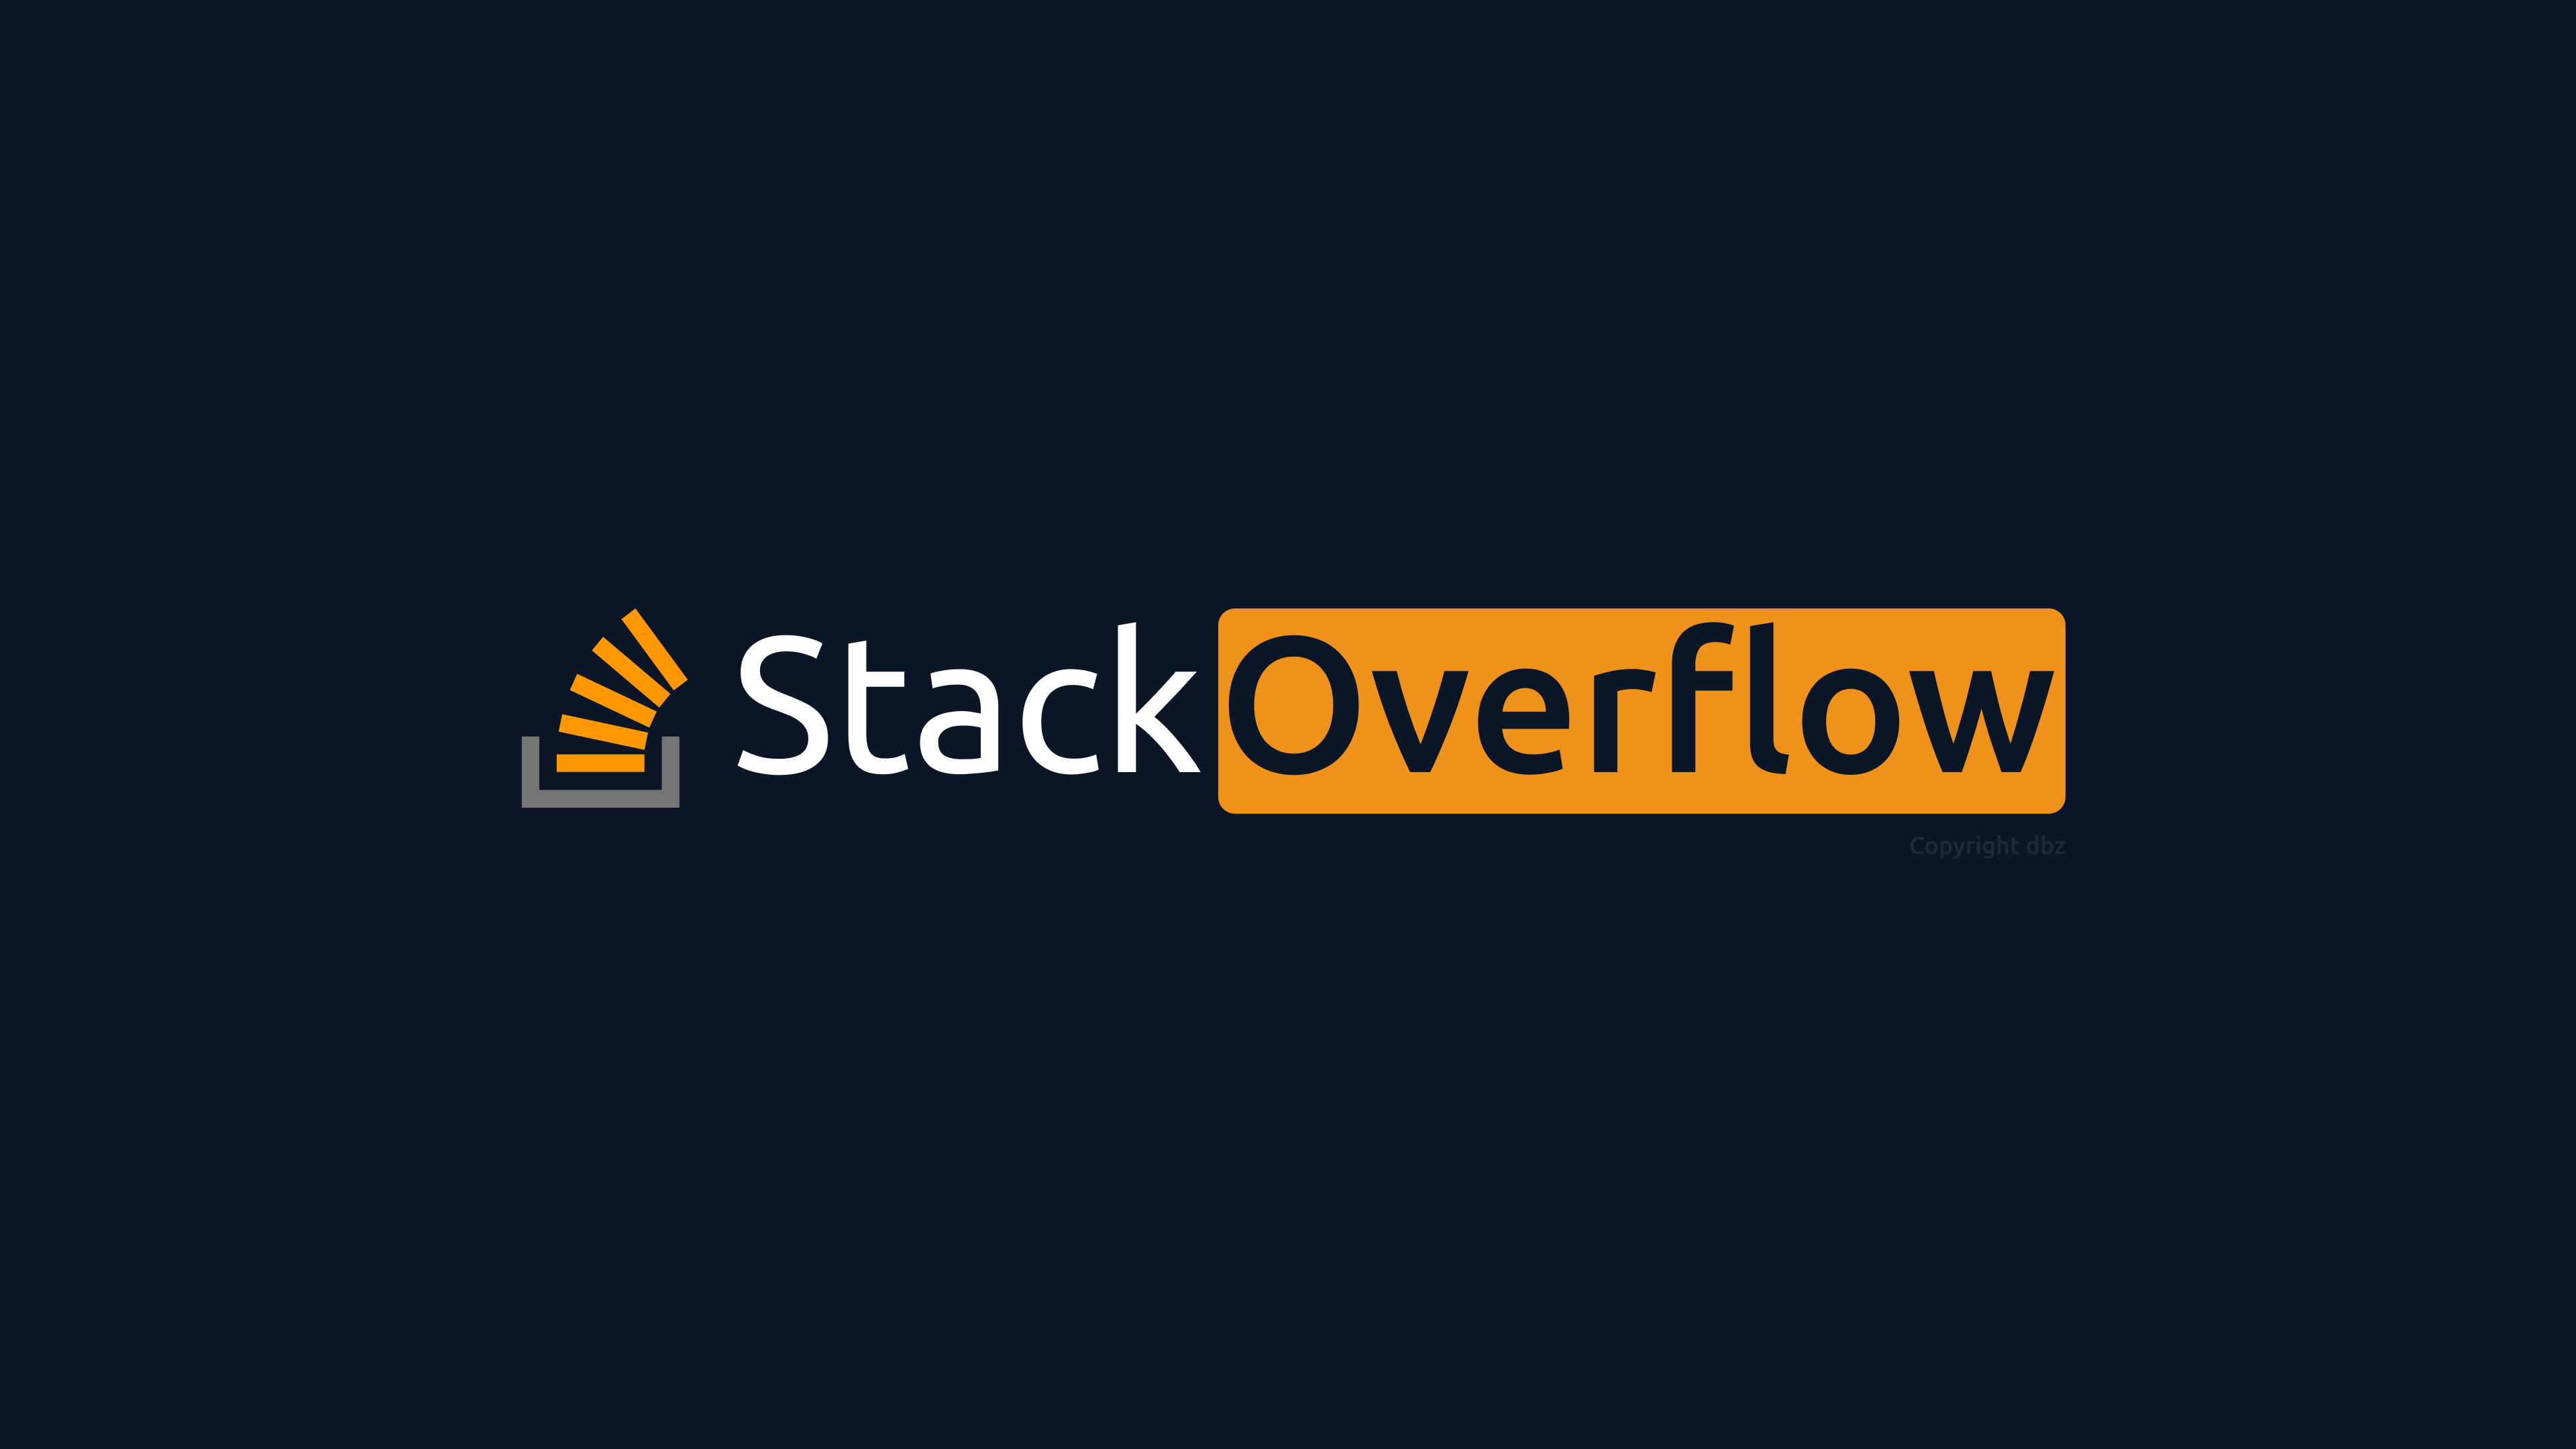 StackOverflow-wallpapers-for-desktop - Dudevs's Ko-fi Shop - Ko-fi ️ ...